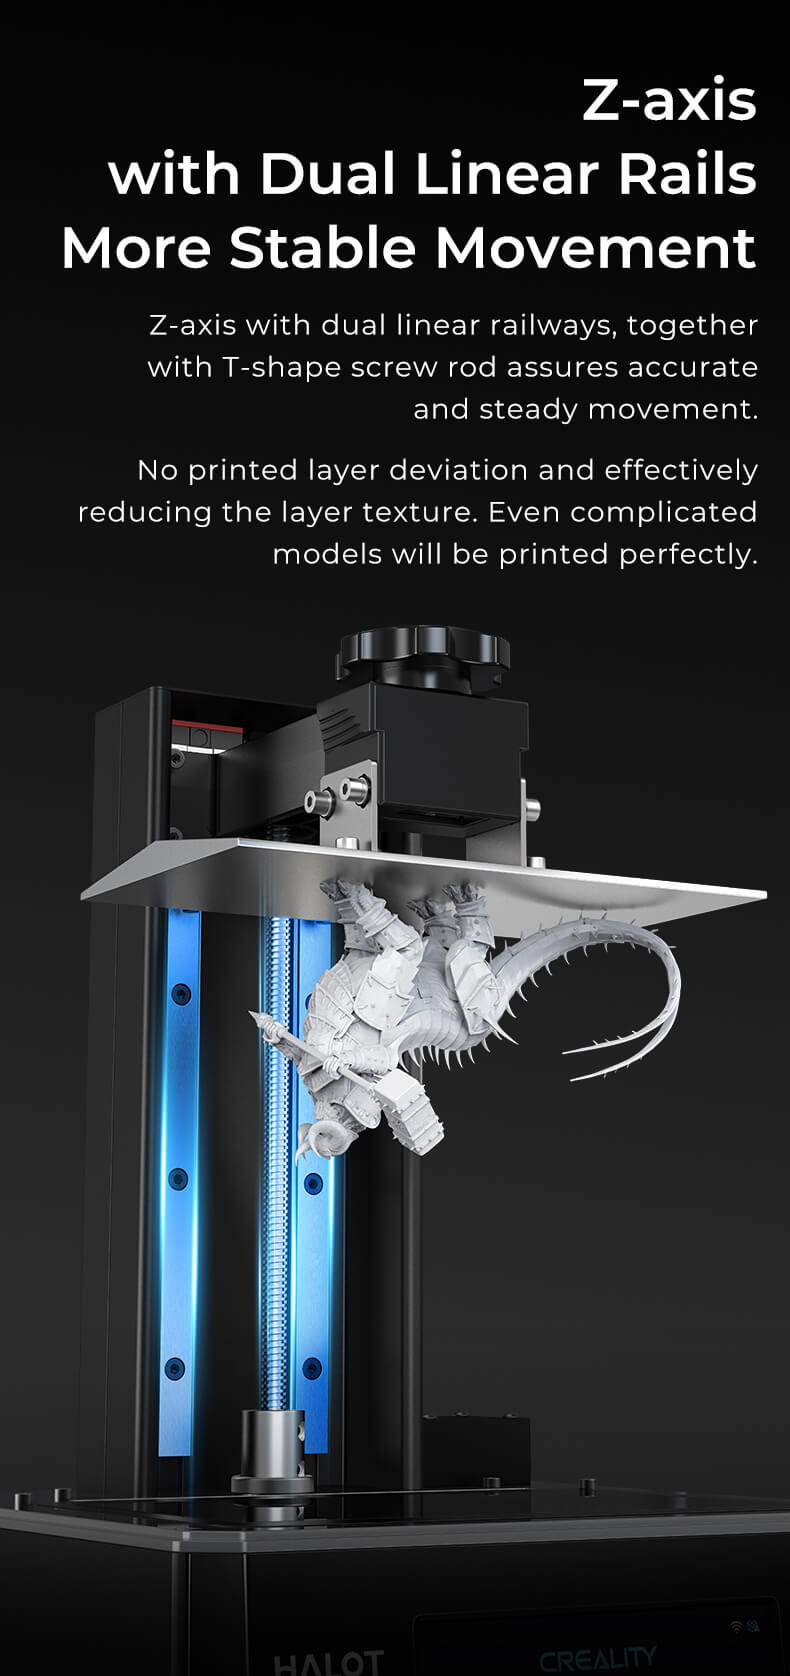 Creality HALOT-one plus CL-79 Resin 3D Printer 7.9 inches 4K Mono UV 405nm 172*102*160mm - Antinsky3d